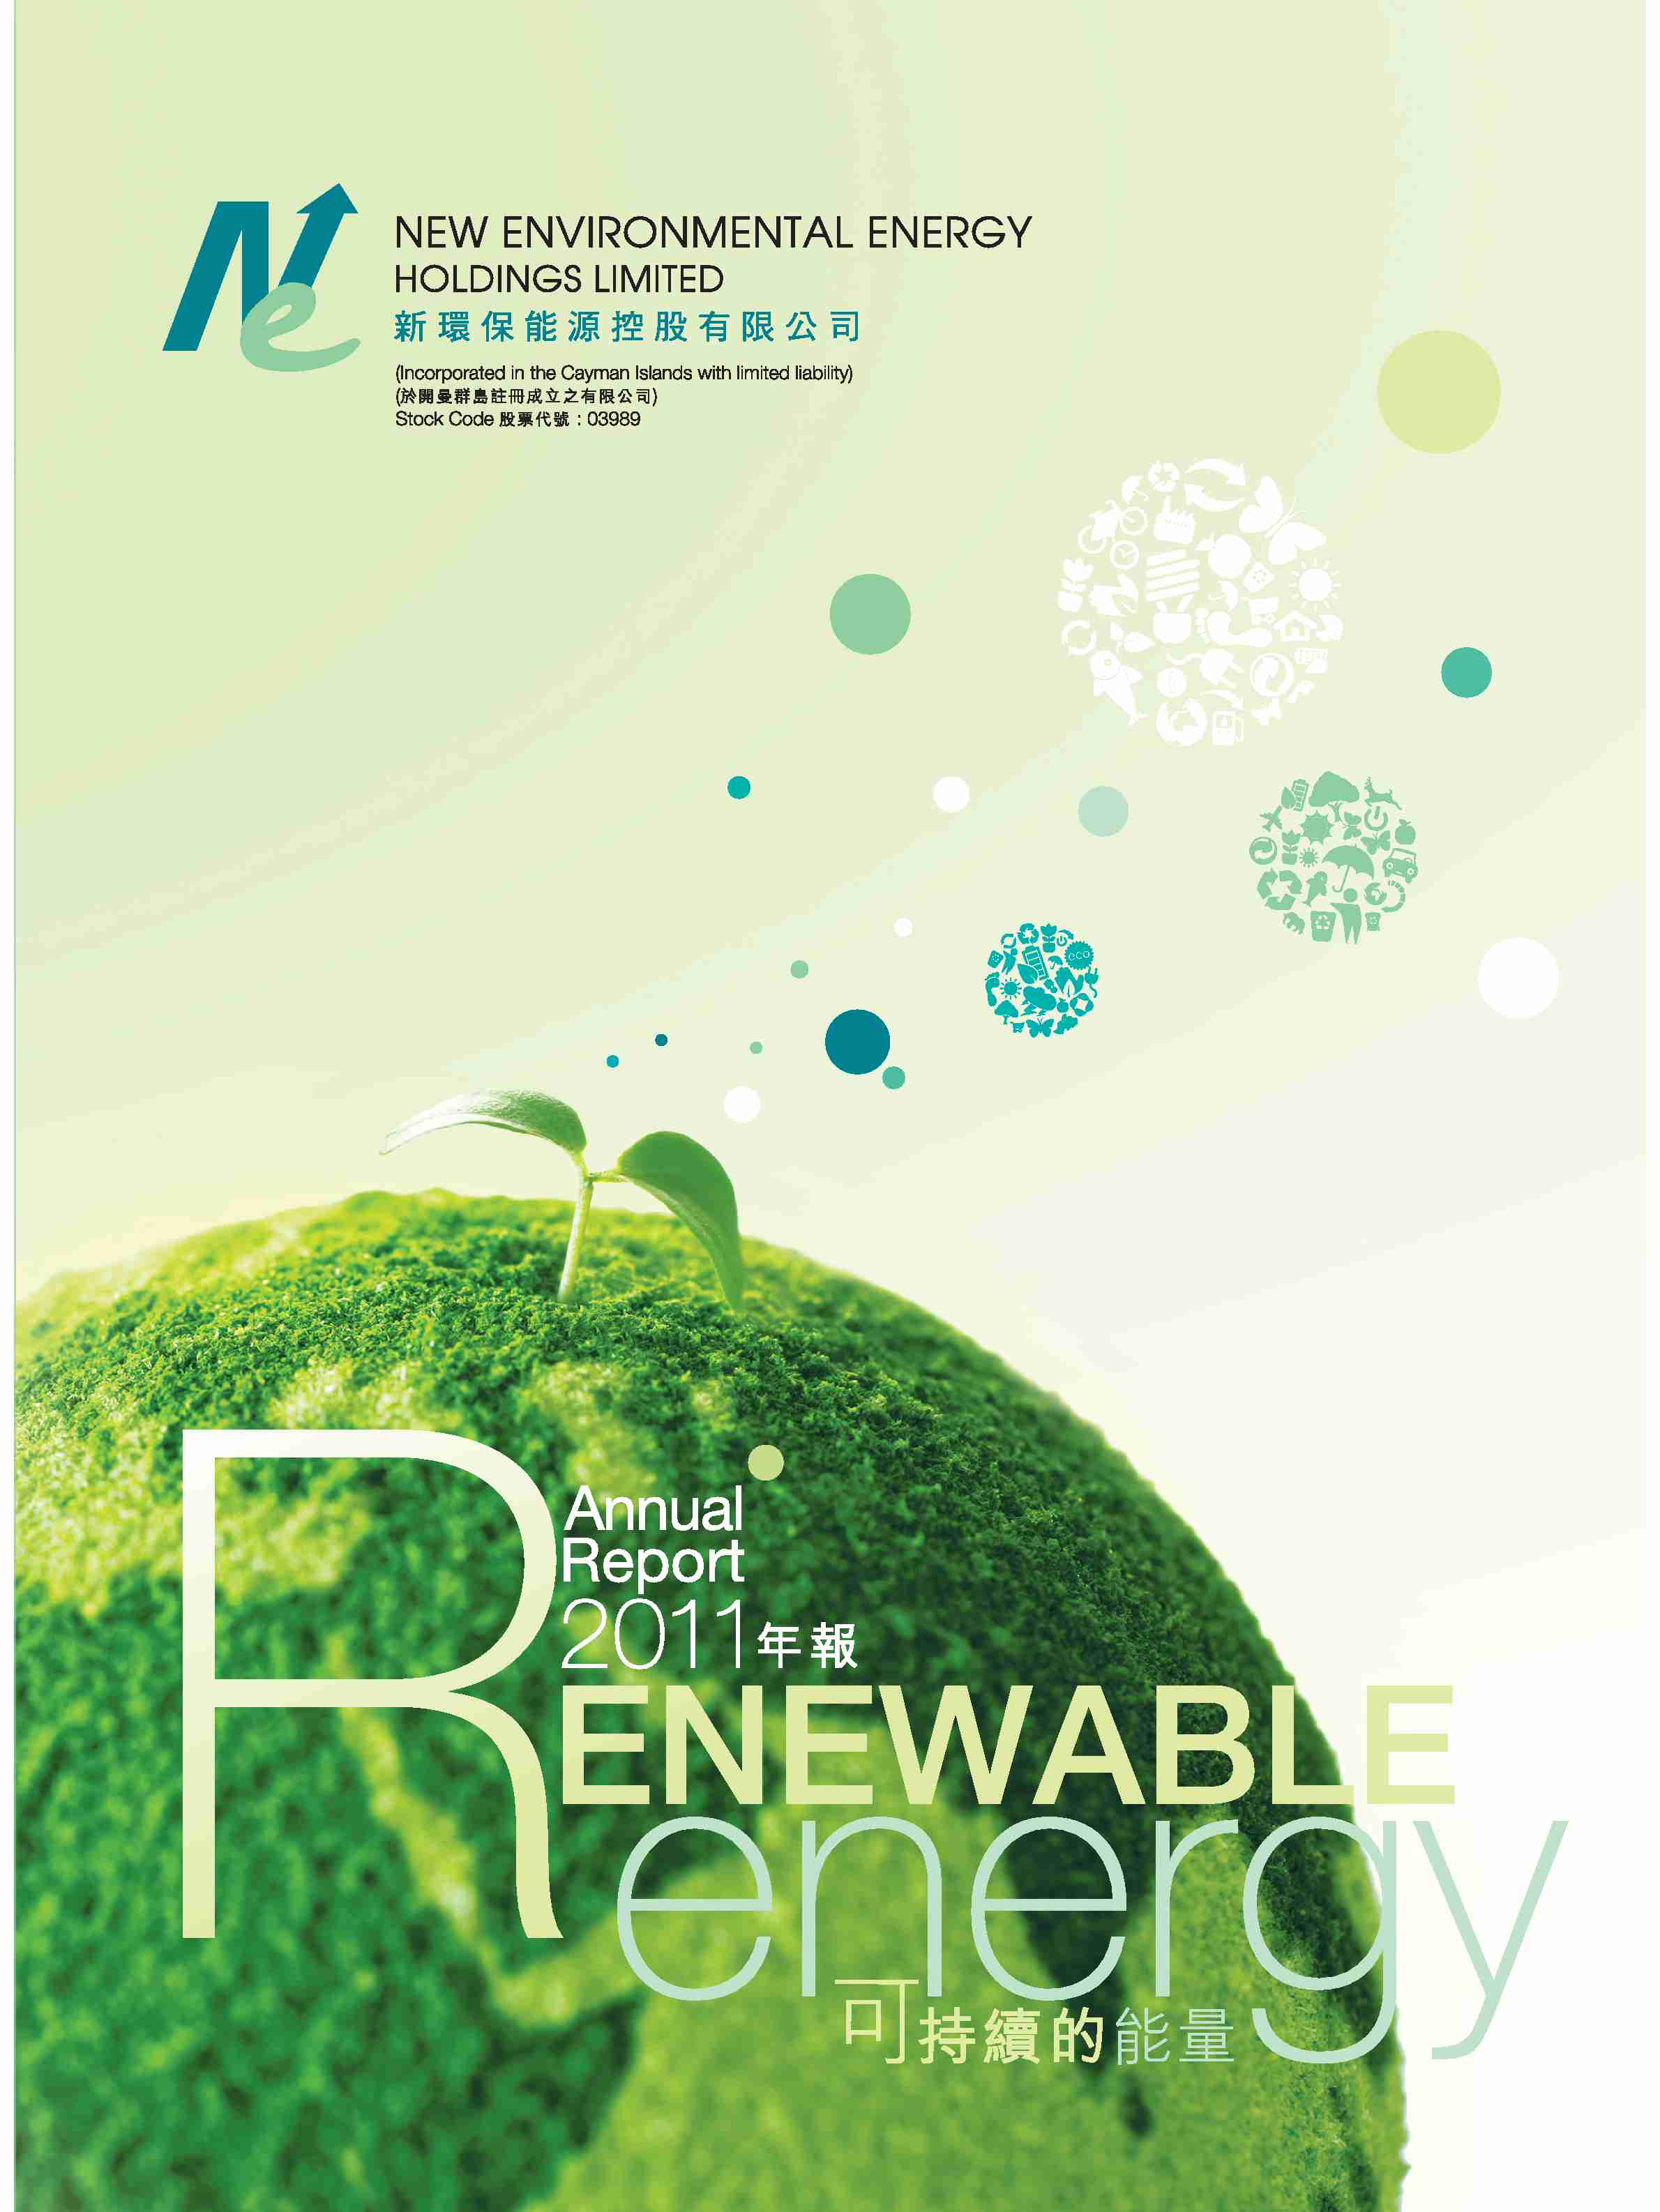 Energy australia annual report 2011